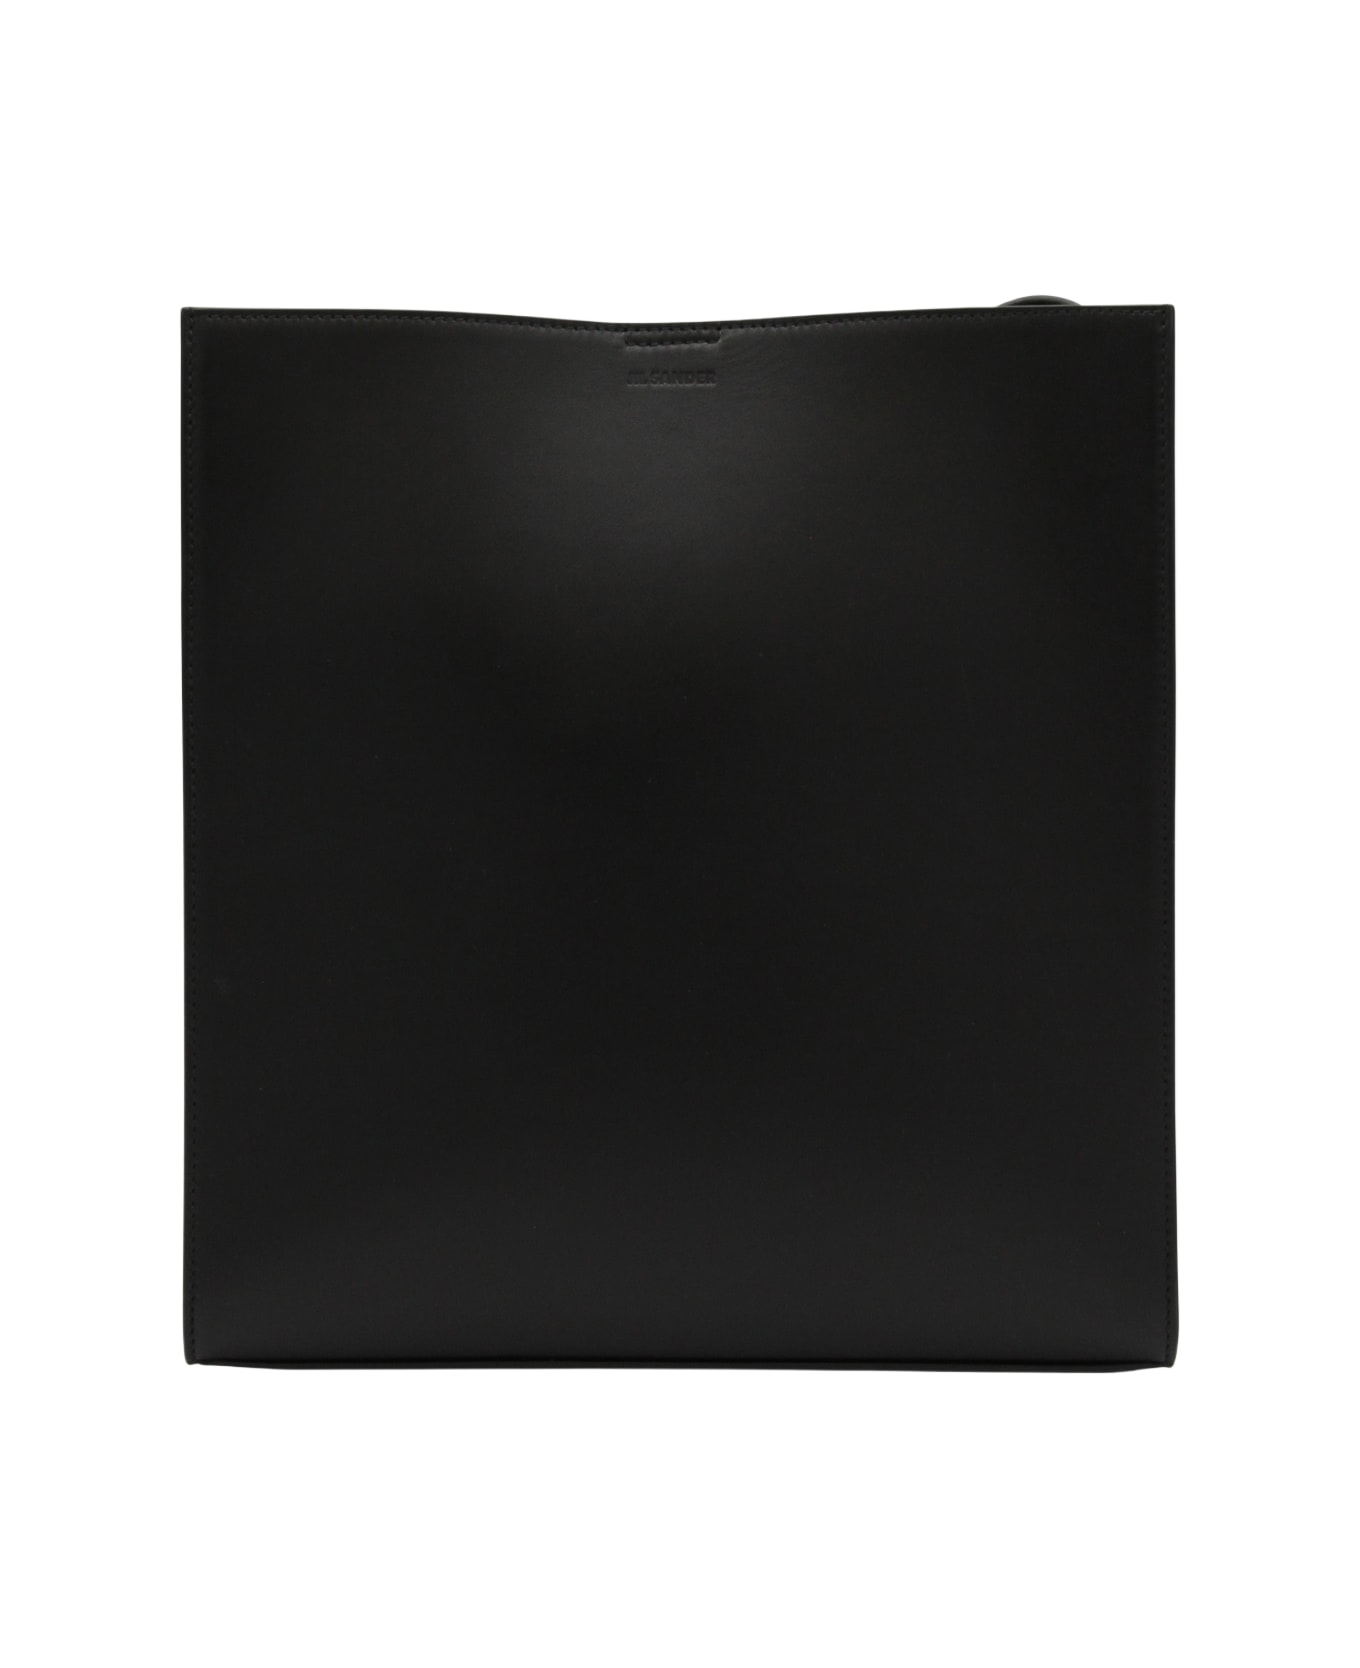 Jil Sander Black Leather Tangle Medium Crossbody Bag - Black